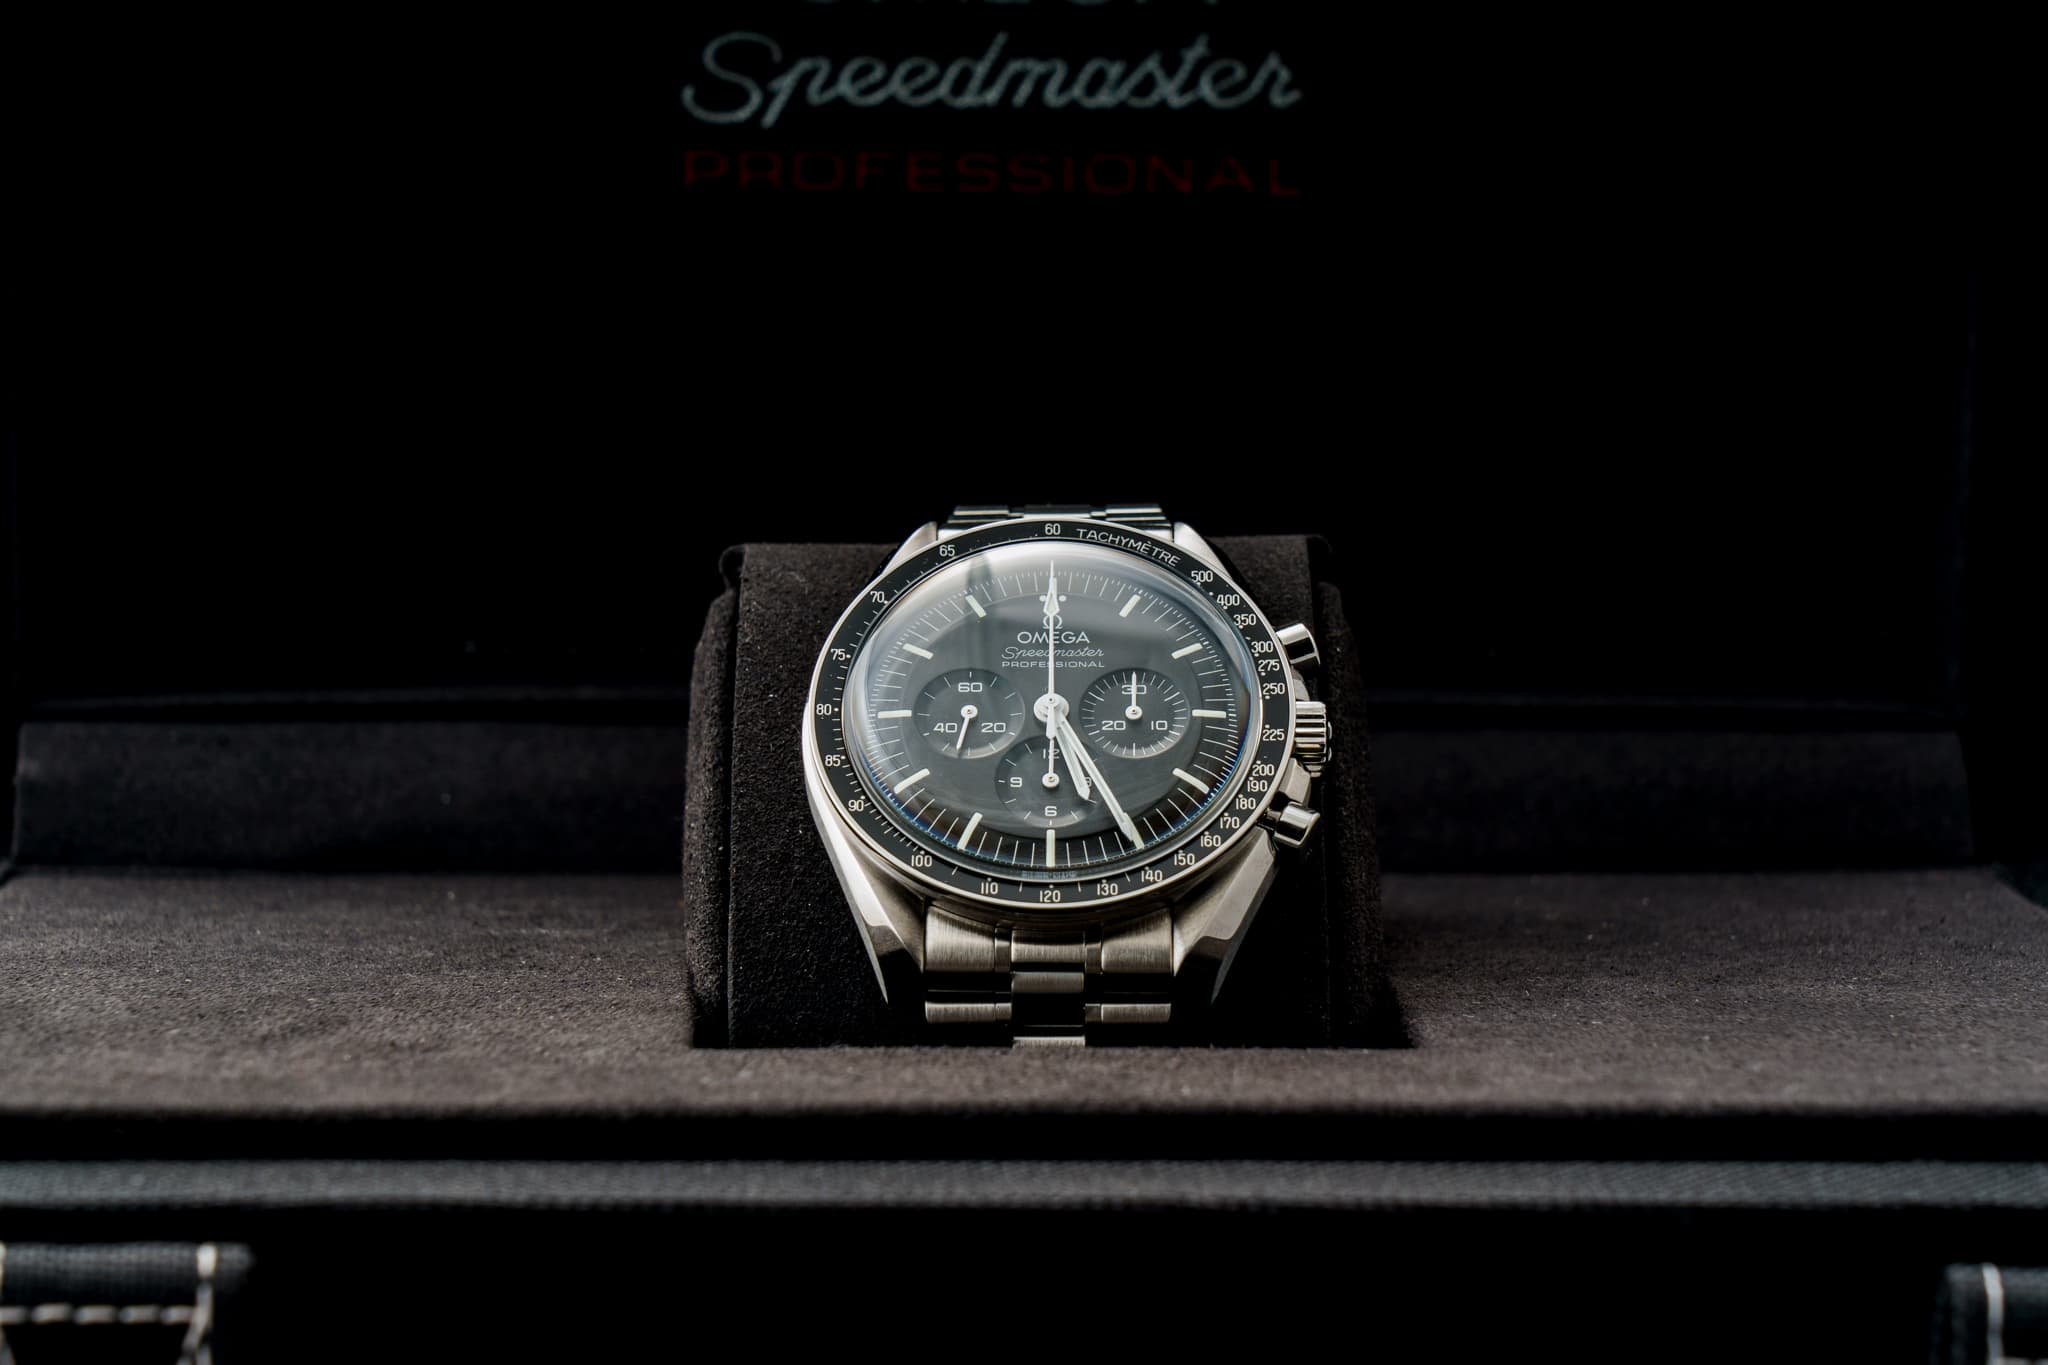  OMEGA Speedmaster Professional moon watch 2021 Full set - Unworn - 13th July